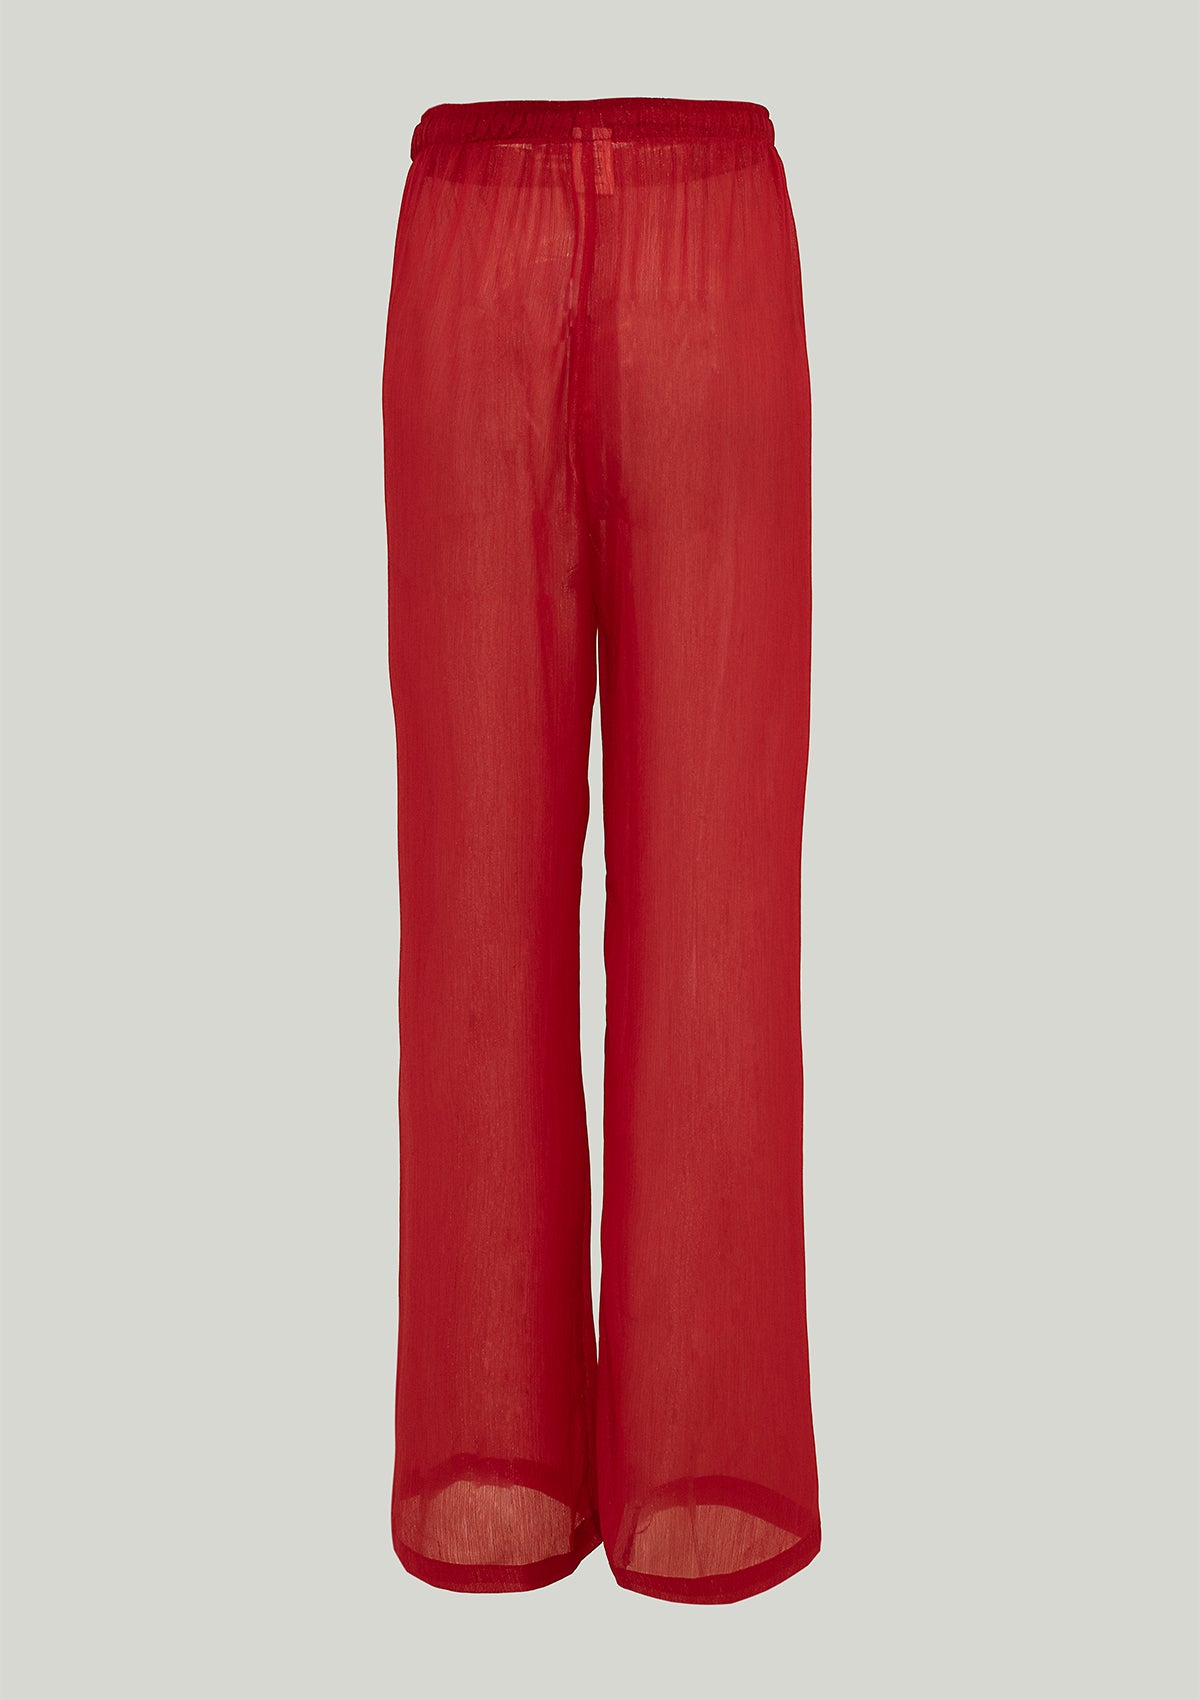 Плажен панталон ARIA RED